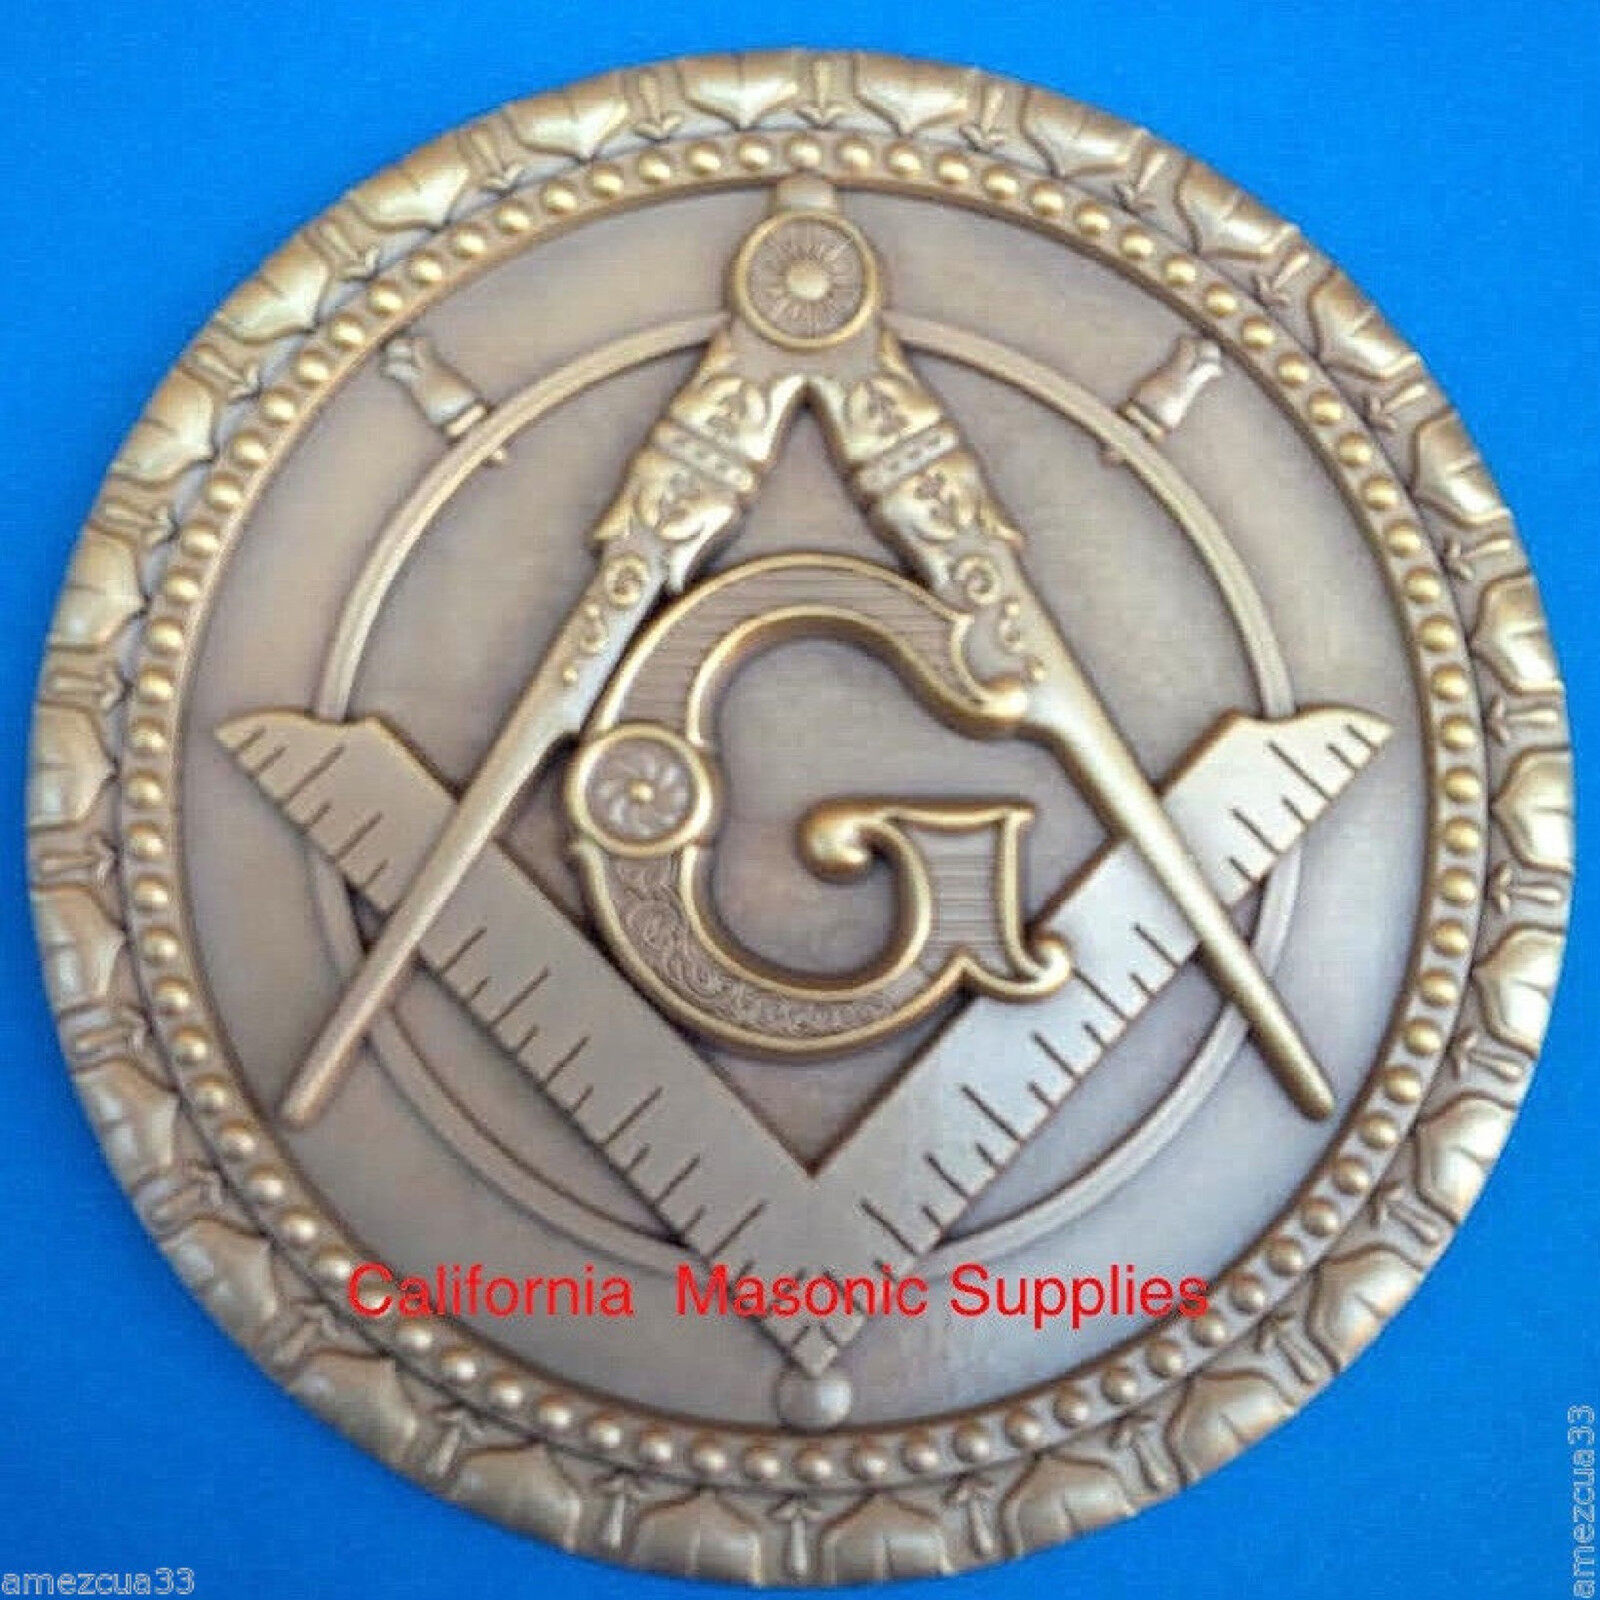 Master Mason Antique Gold Heavy Auto Rear Emblem For Freemasons Around The World